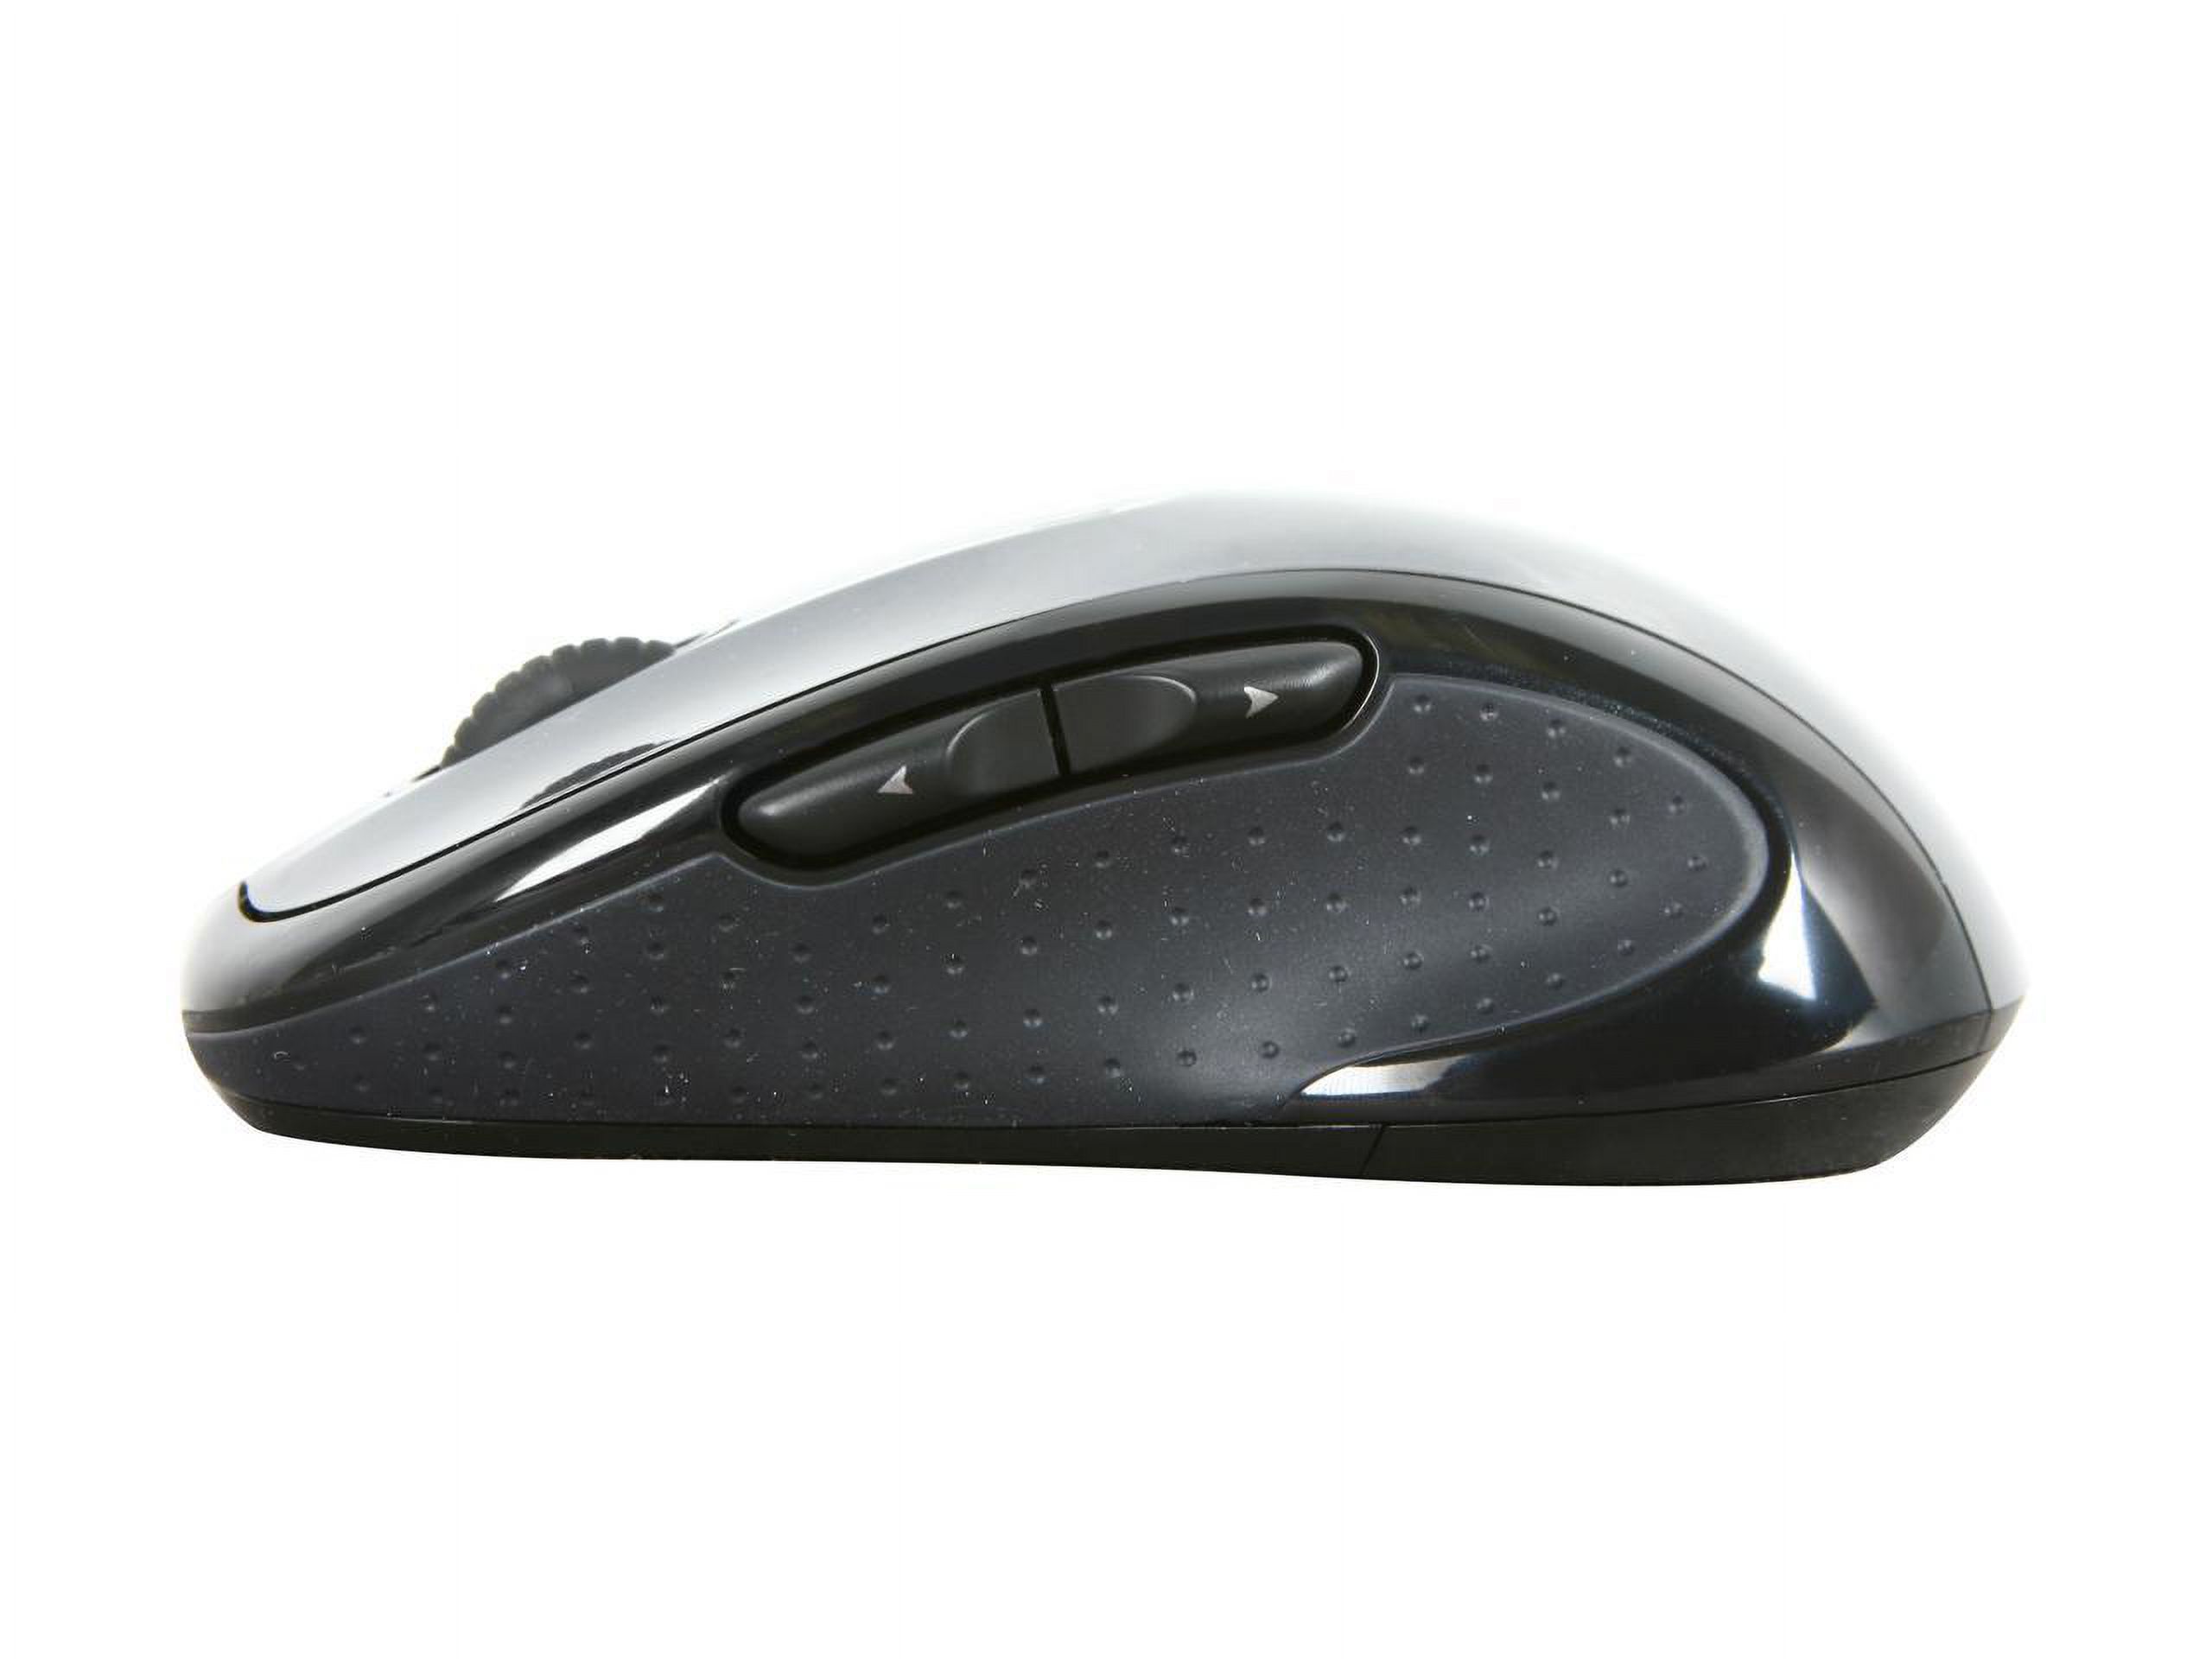 Logitech Wireless Mouse M510 - image 4 of 7